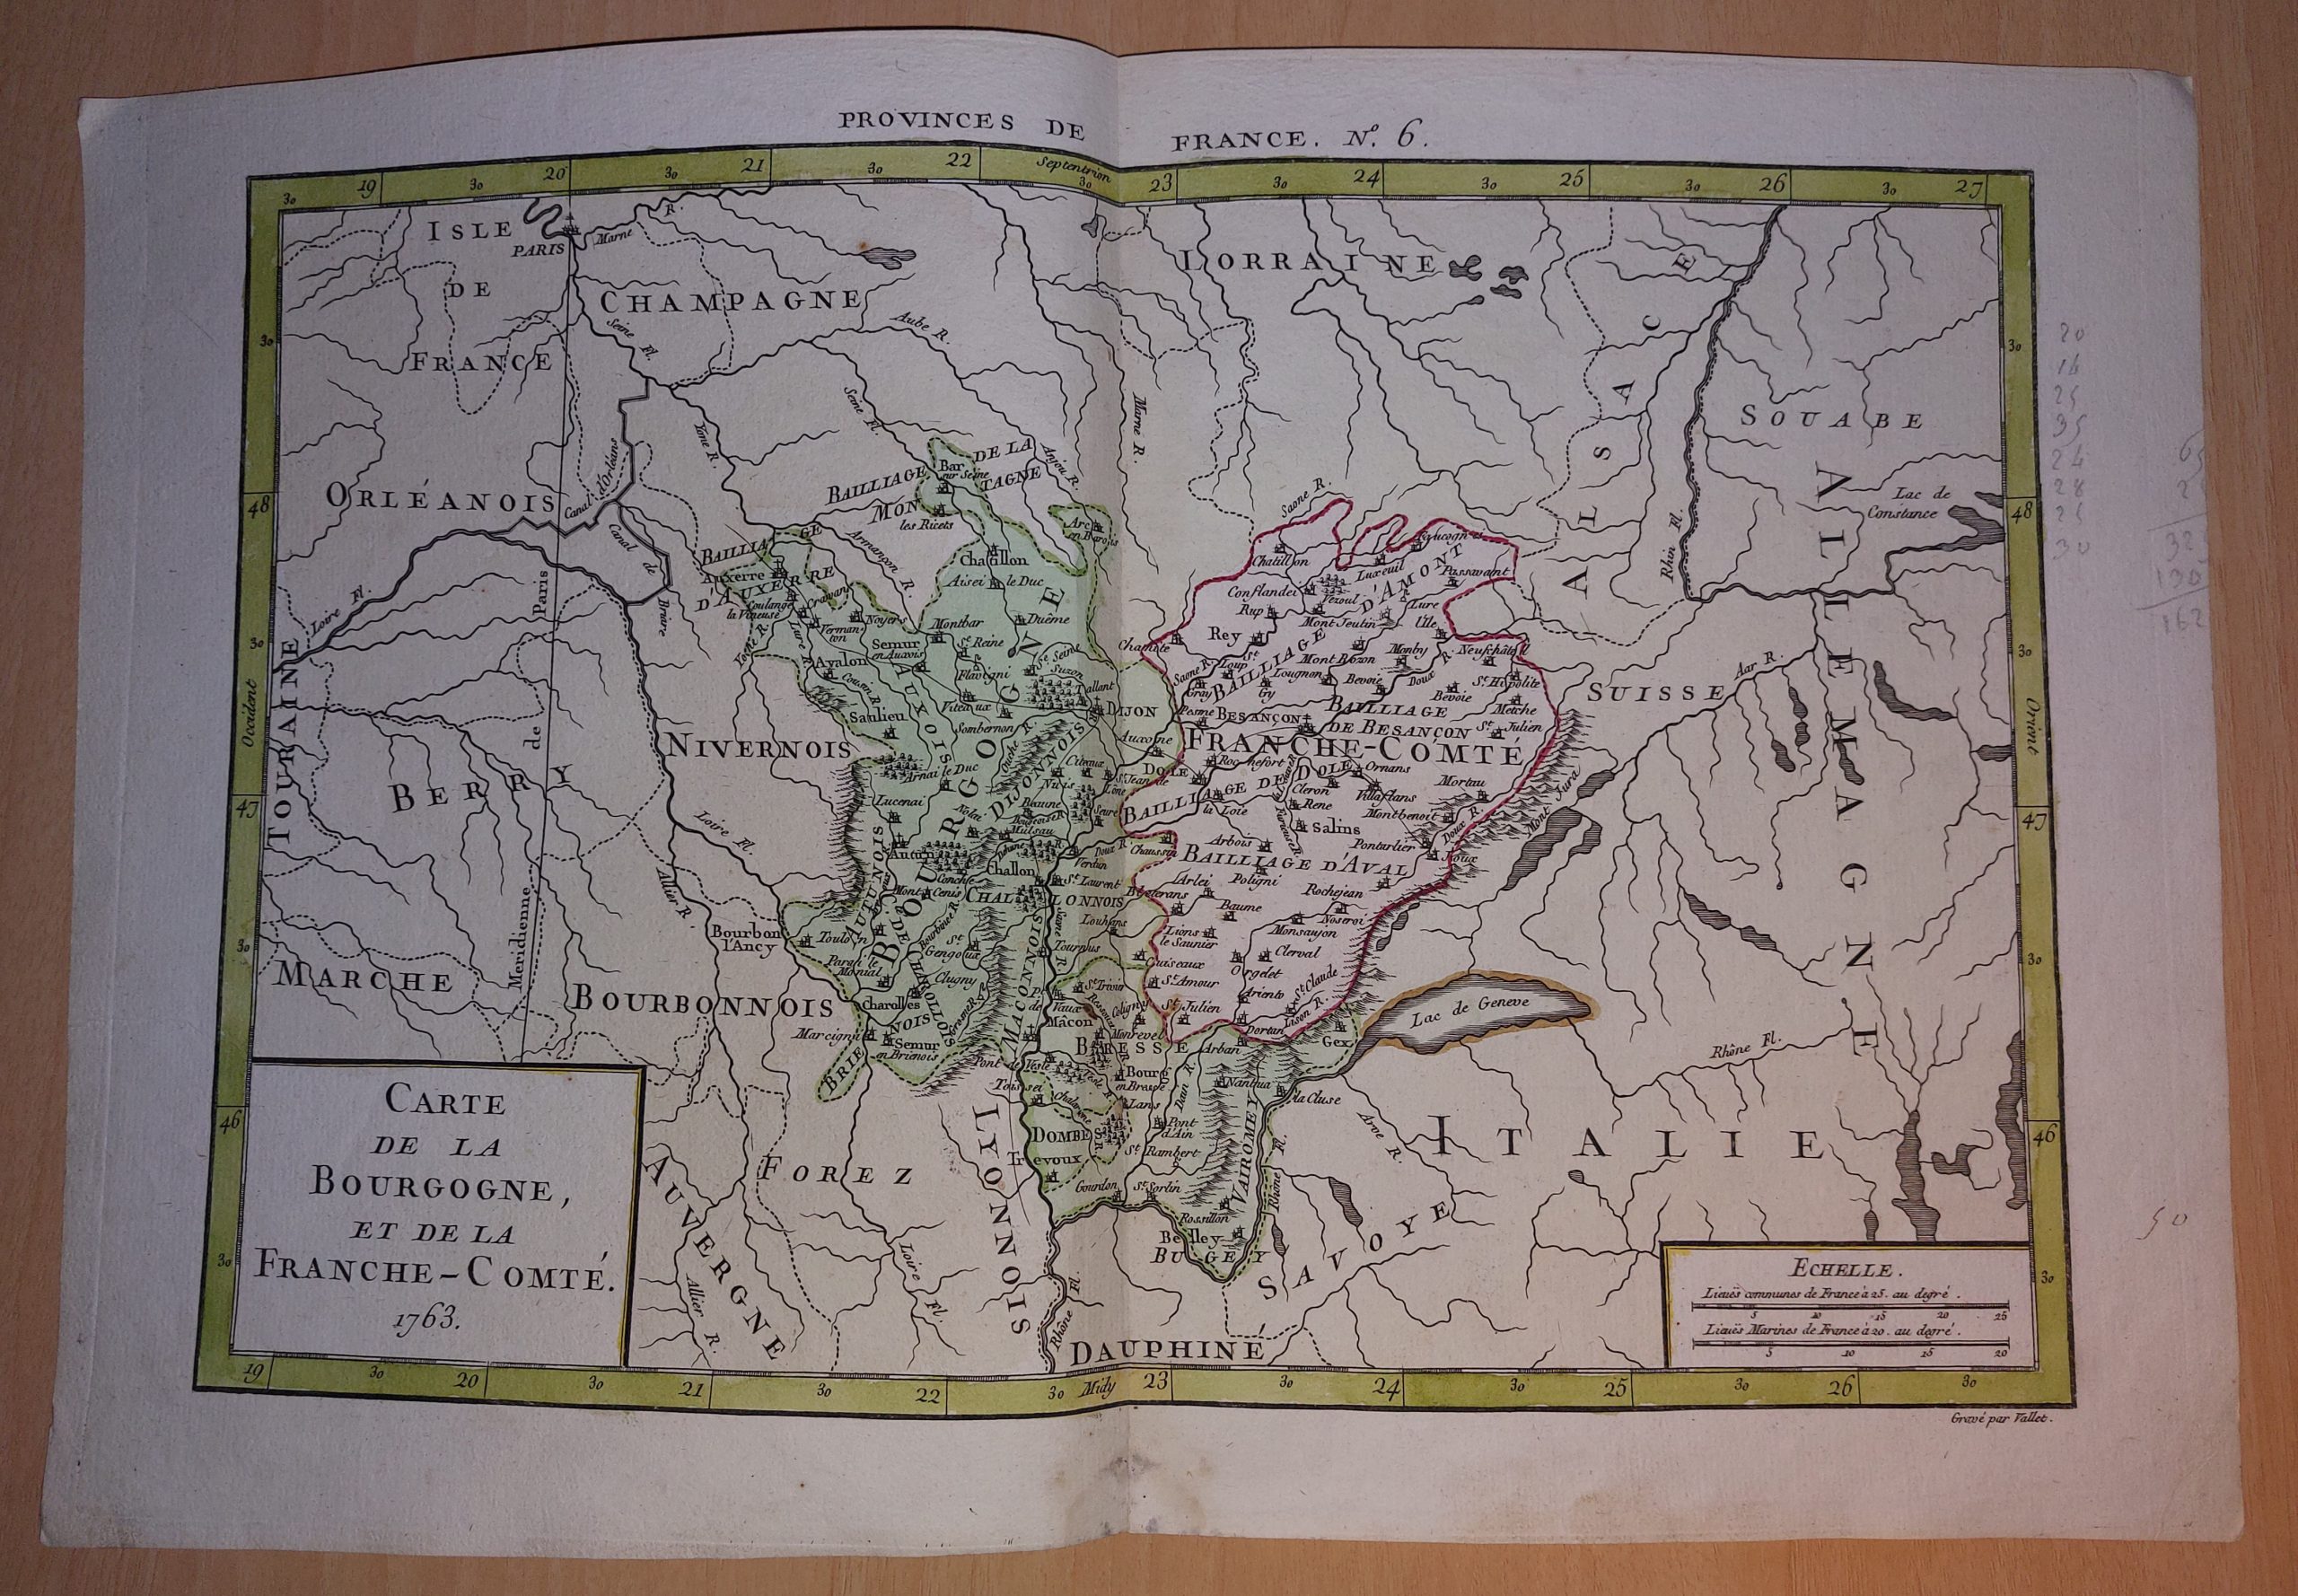 mapa siglo xviii carte bourgogne franche comté provinces france francia